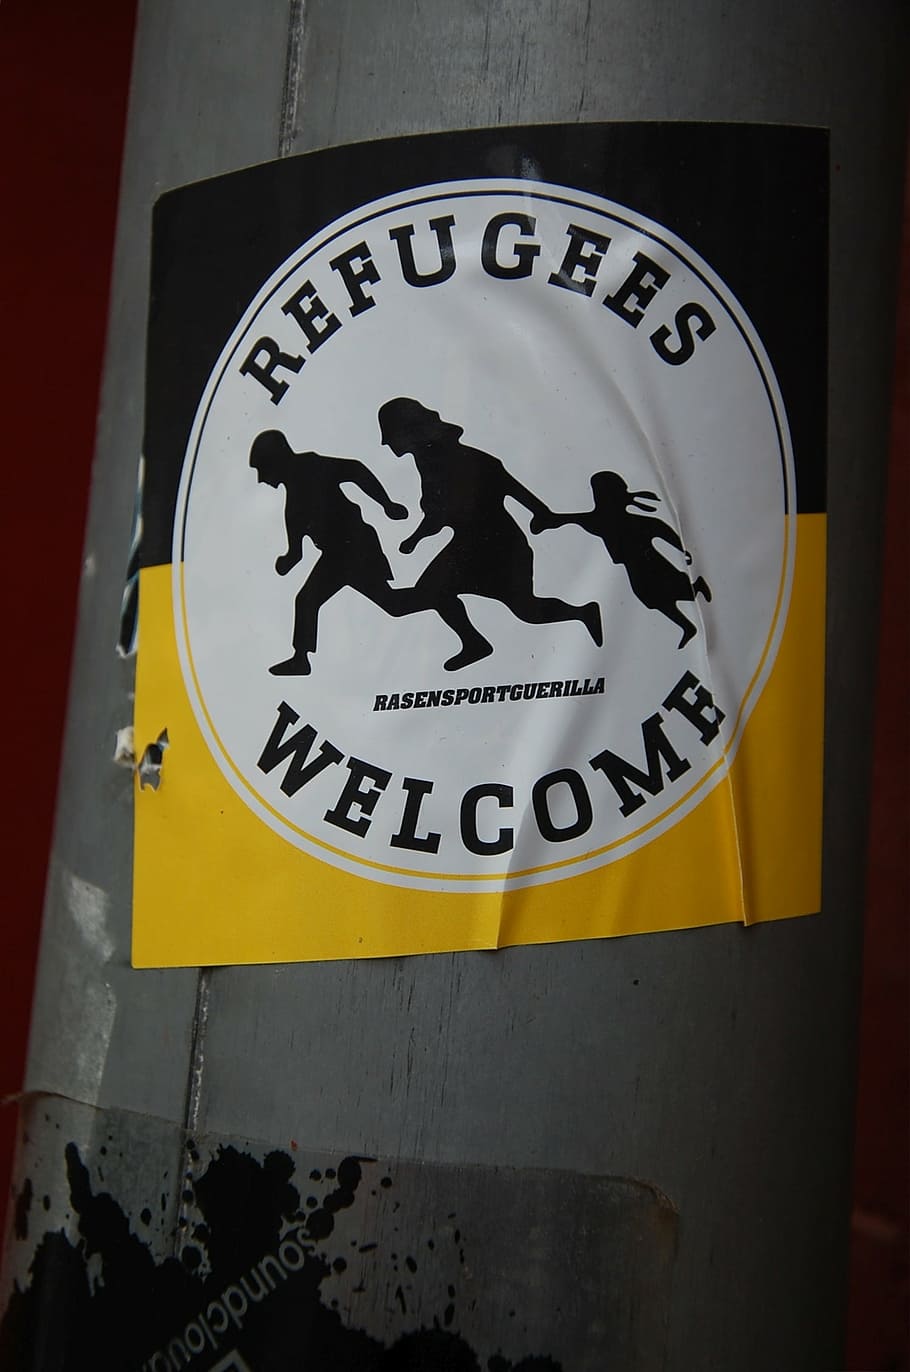 refugees, welcome, sticker, sign, communication, representation, human representation, close-up, text, black color